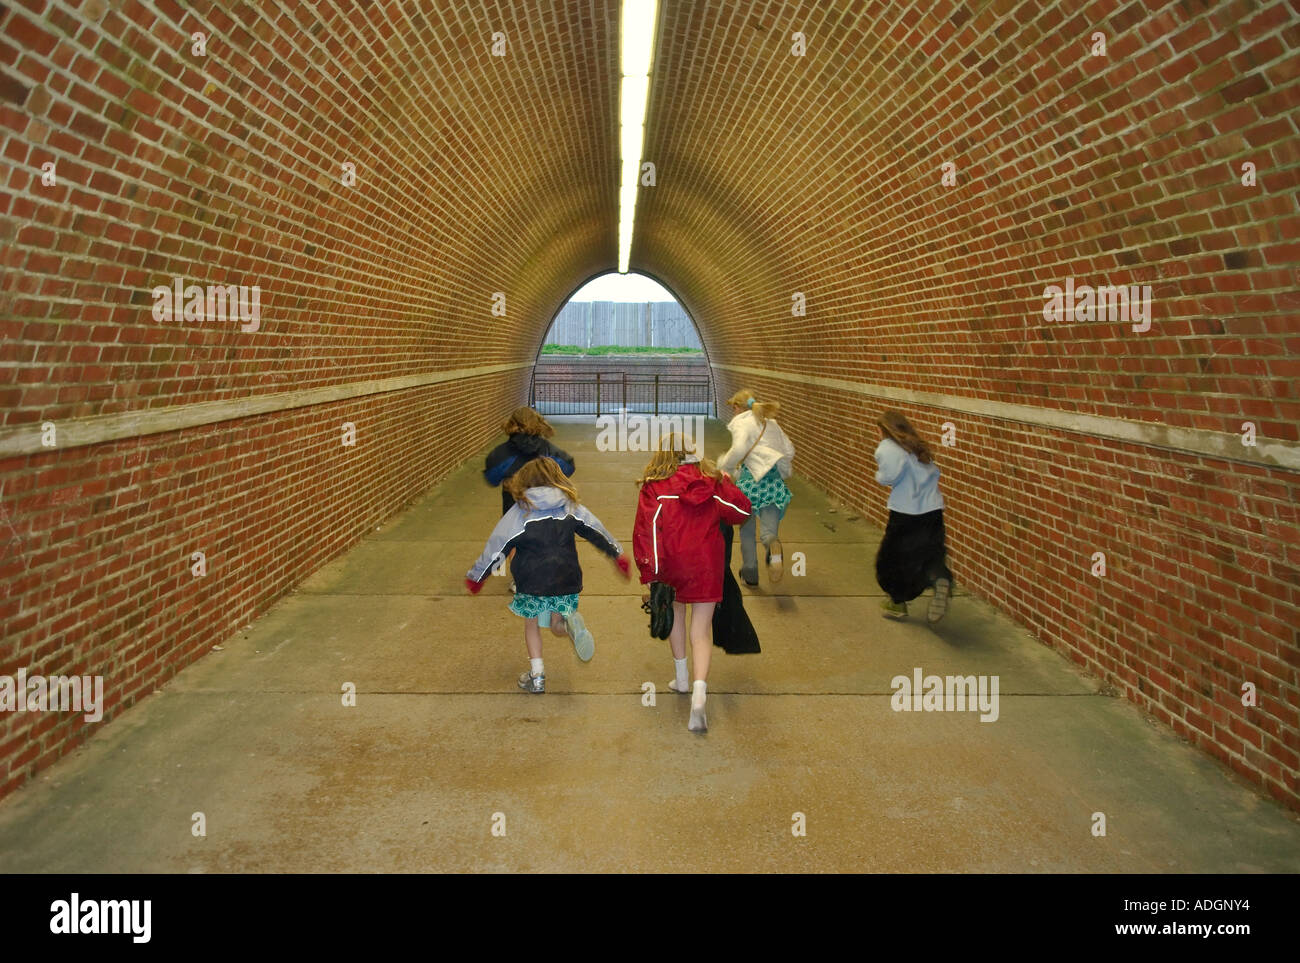 europe uk england sussex children running away in tunnel under road Stock Photo